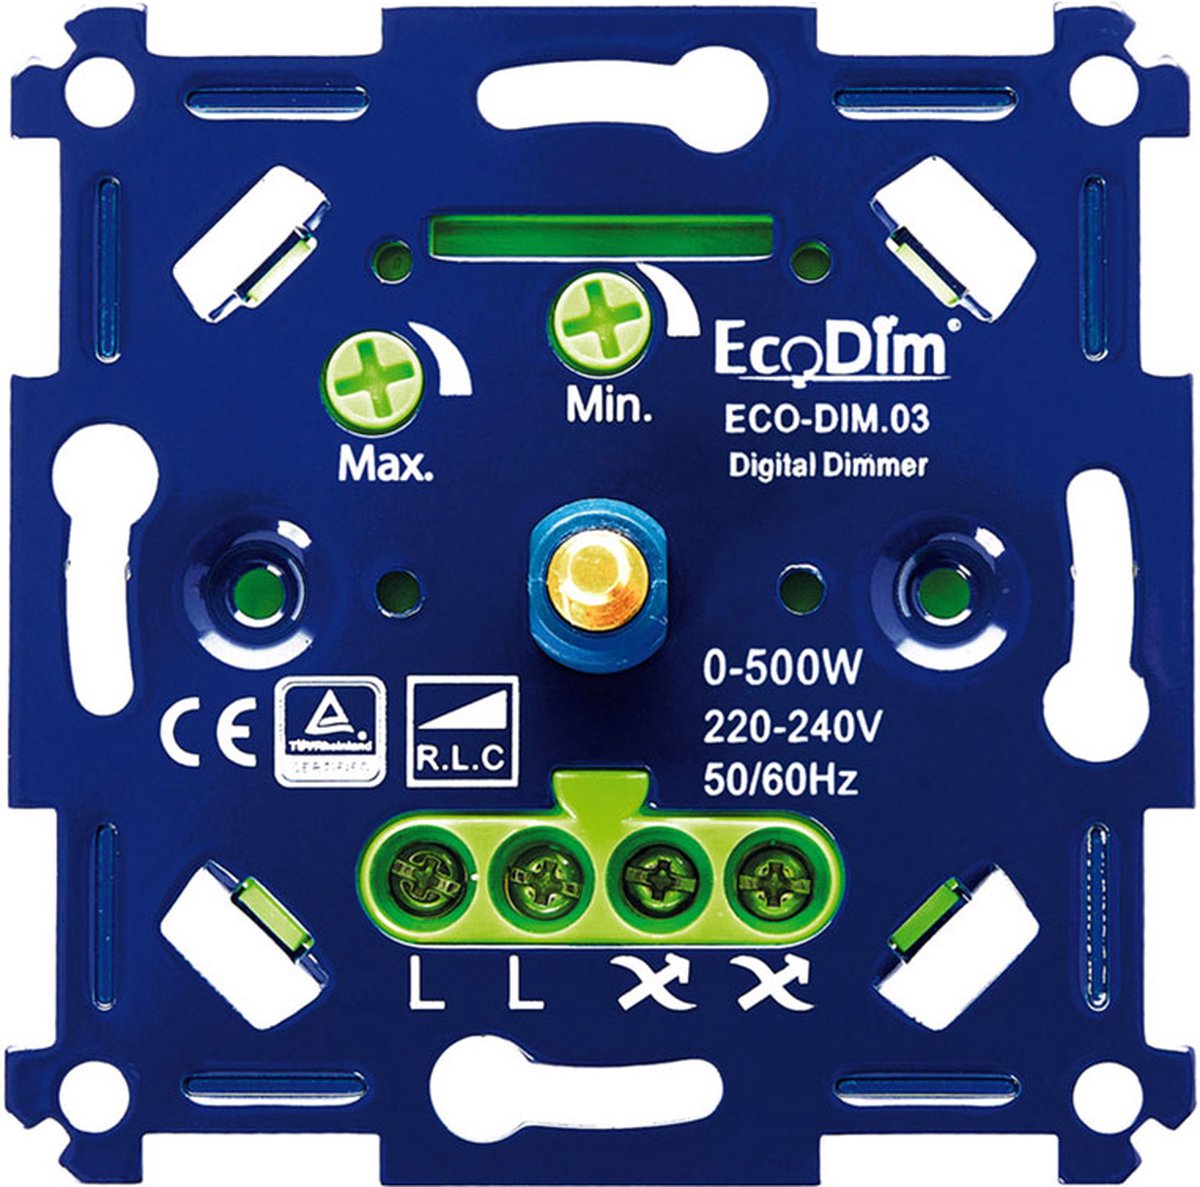 EcoDim led dimmer ECO-DIM.03 0-500W RLC, fase aansnijding & fase afsnijding, universeel, voor alle merken afdekmateriaal